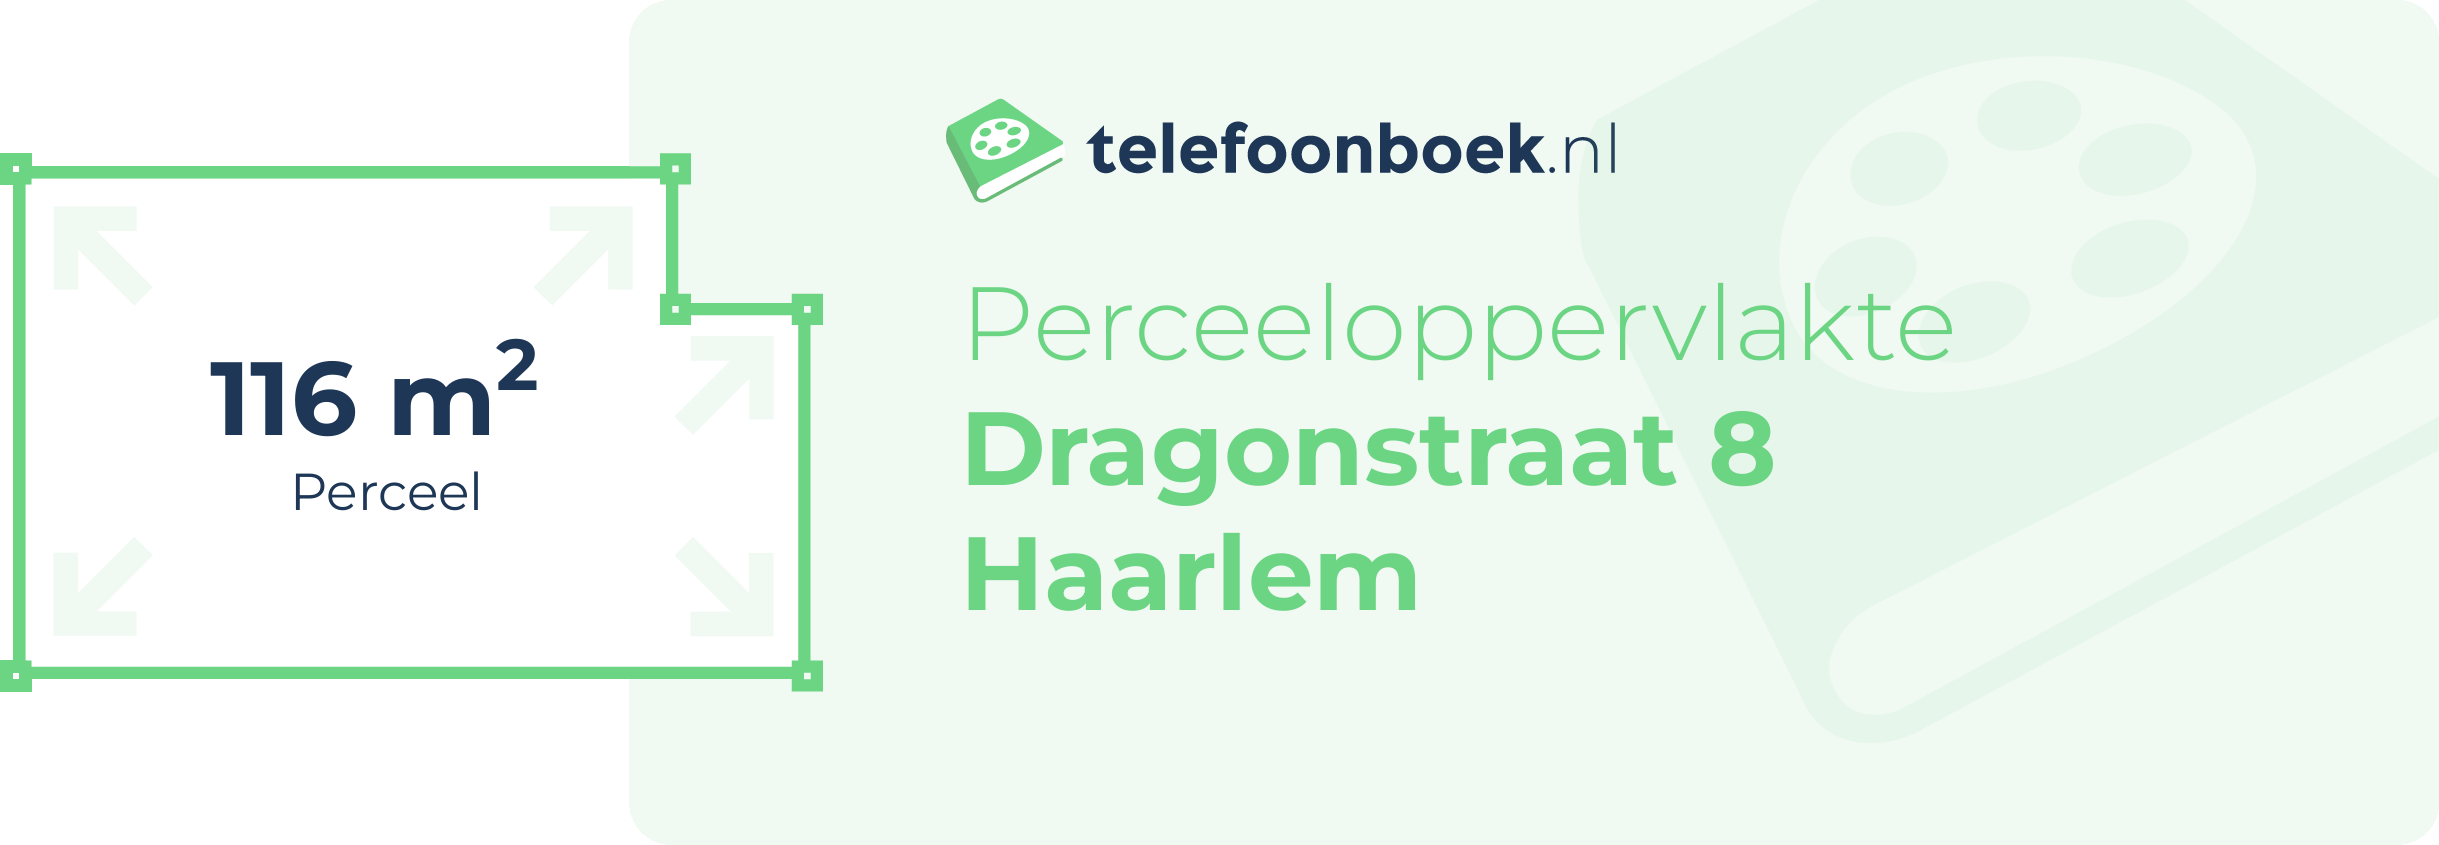 Perceeloppervlakte Dragonstraat 8 Haarlem